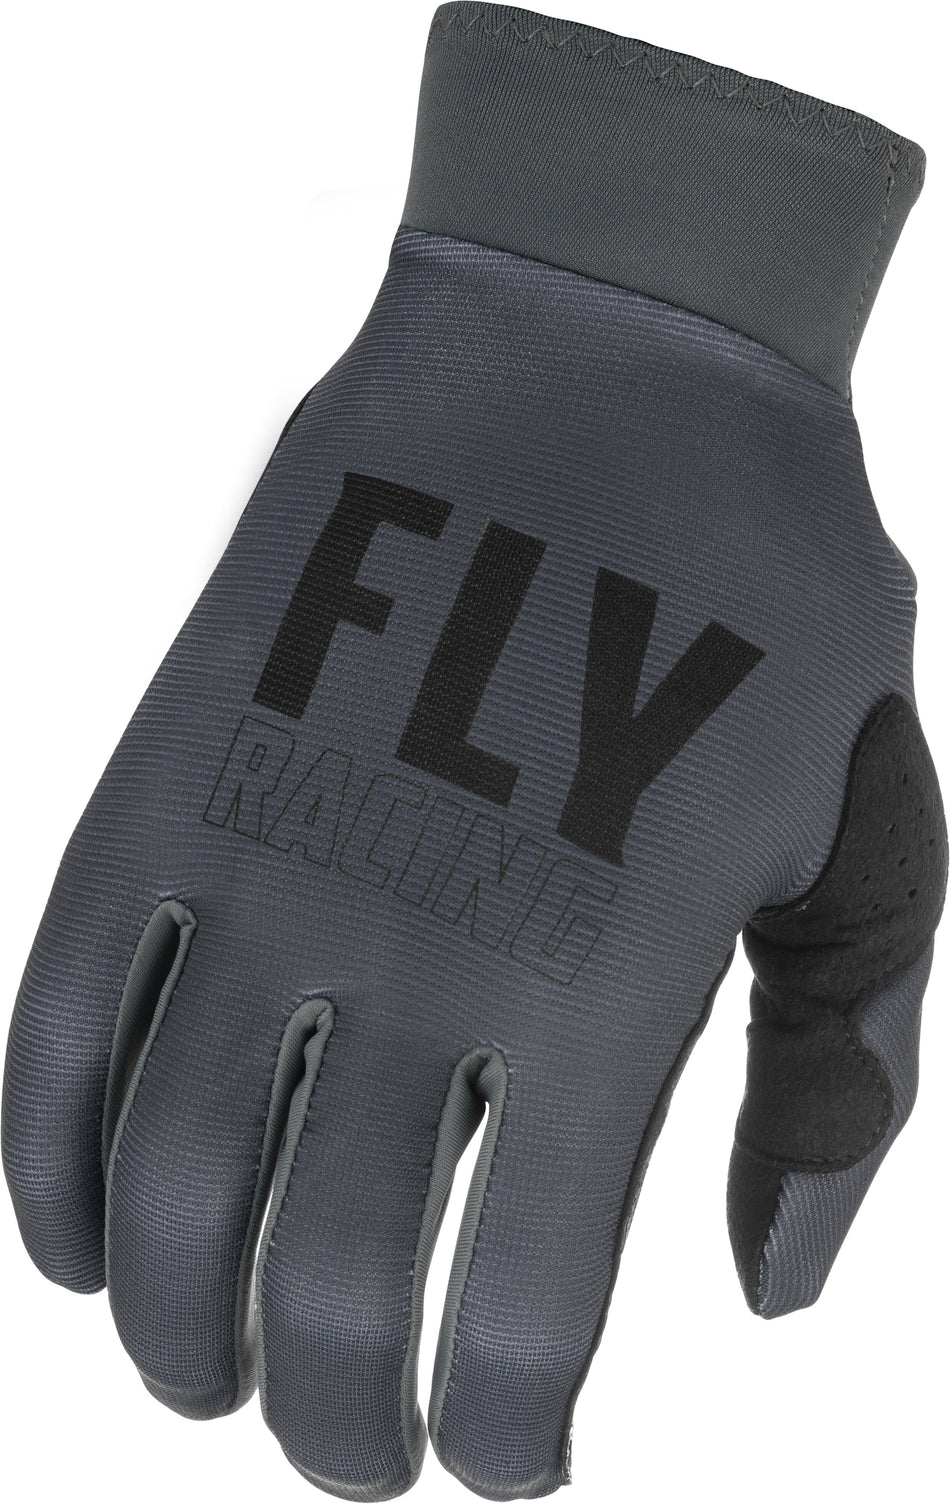 FLY RACING Pro Lite Gloves Grey/Black Sz 10 374-85610